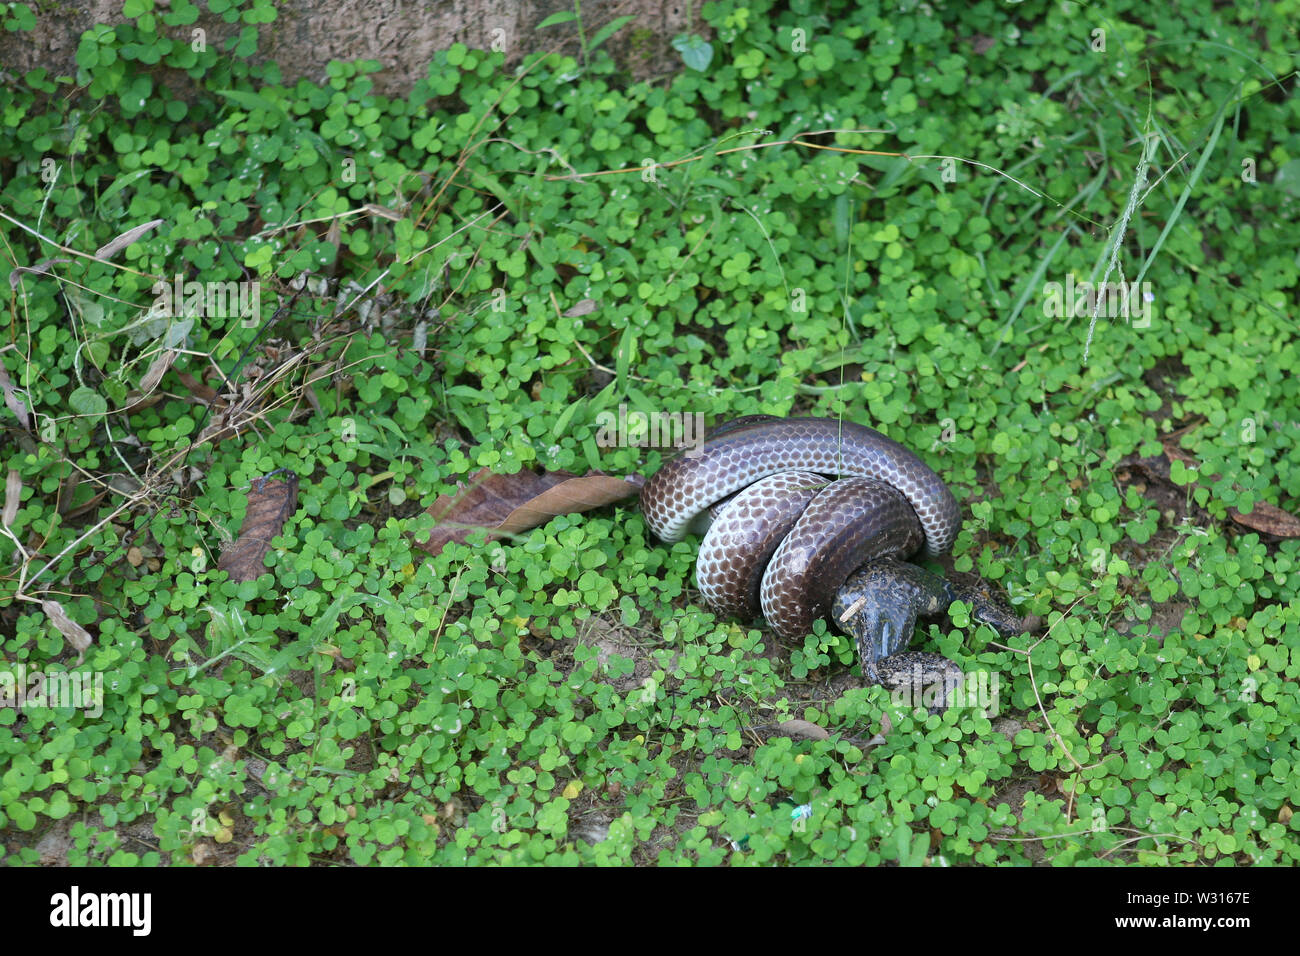 Nature rouge est tombé : ptyas korros (serpent rat indochinois) tuer une grenouille, Ta Prohm, Angkor, Siem Reap, Cambodge Banque D'Images